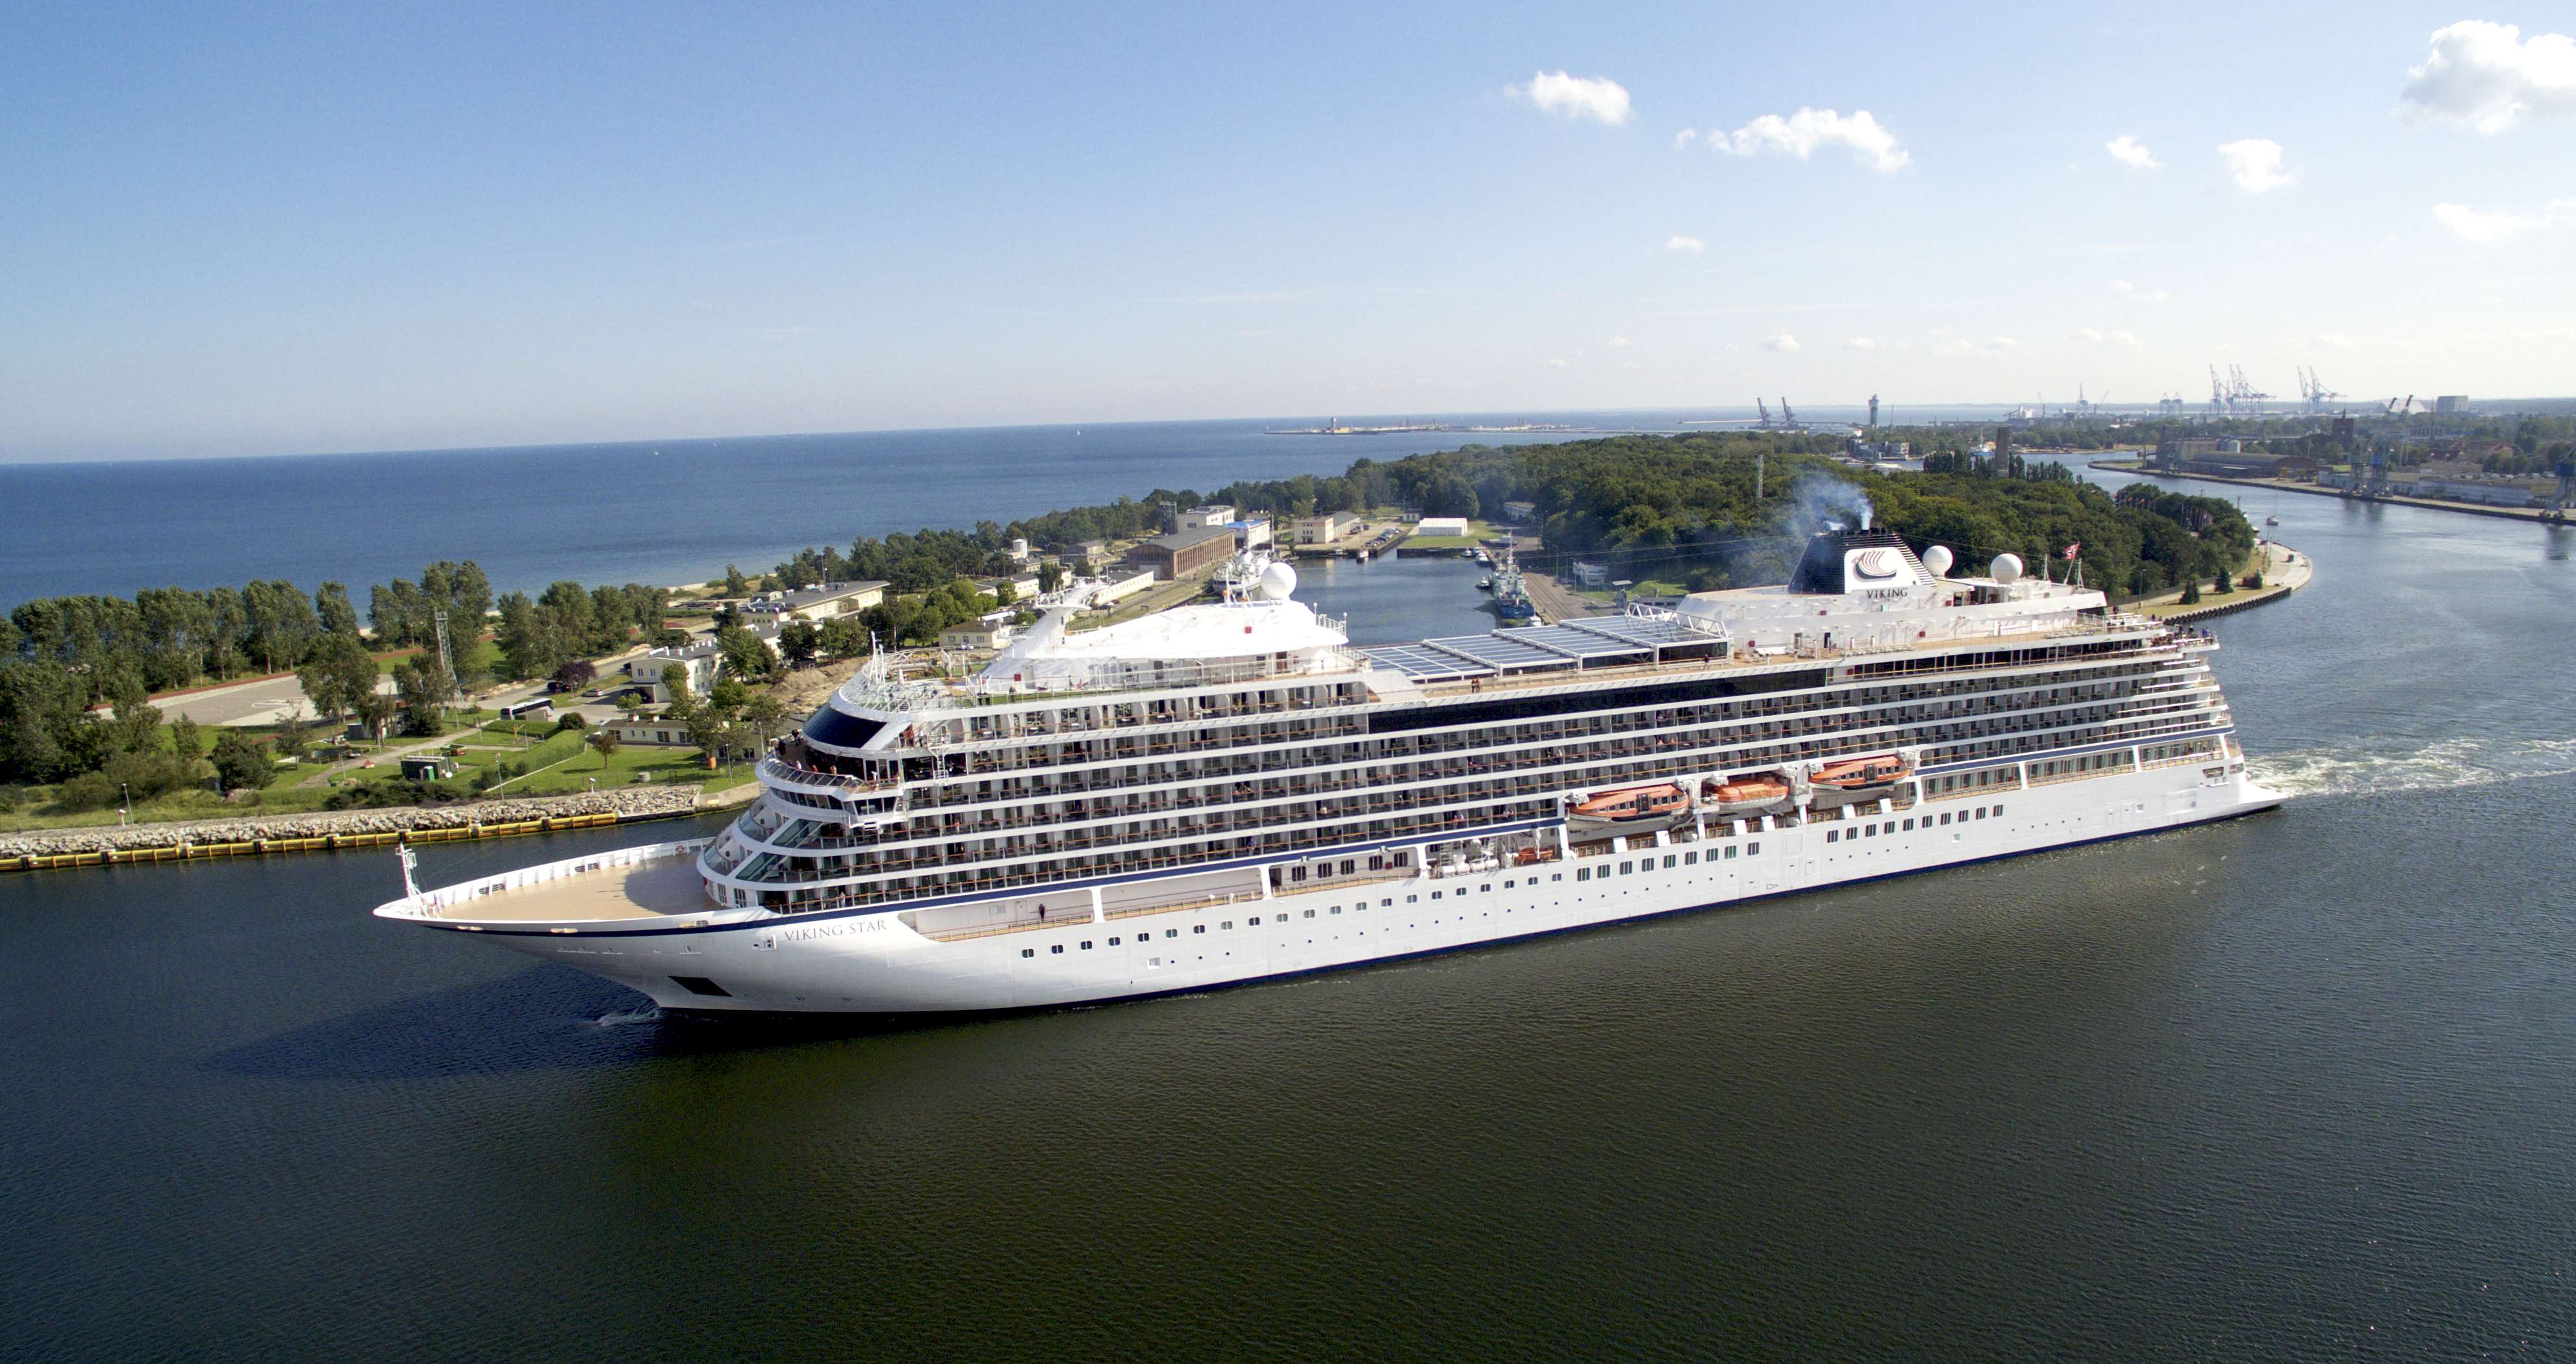 The Port of Gdansk opens the cruise season - MarinePoland.com